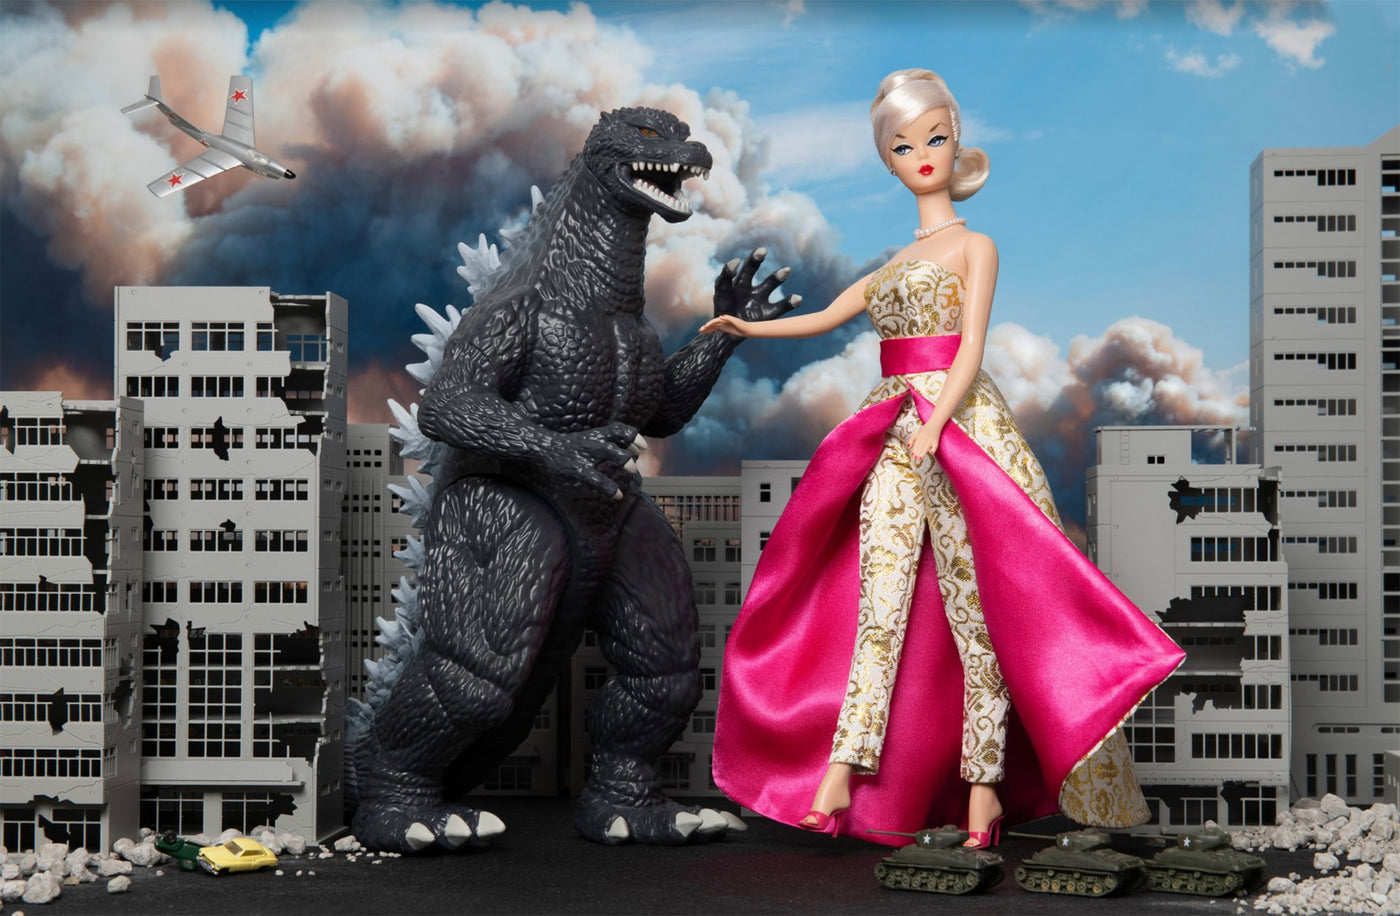 Godzilla vs Barbie Photo